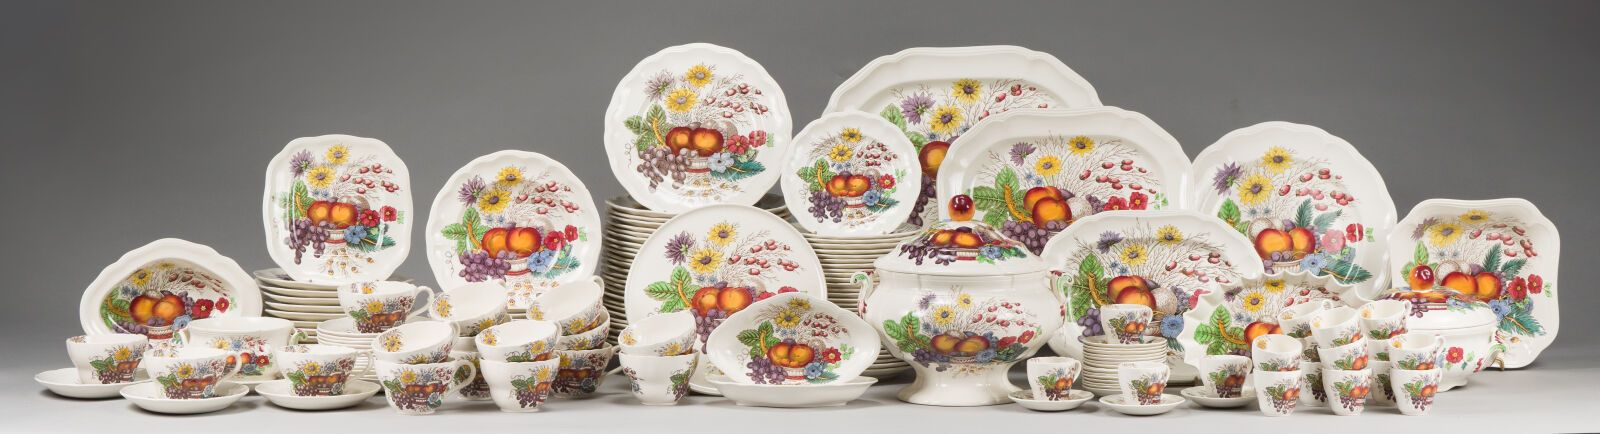 Null COPELAND :

陶器晚餐服务，有多色的水果和花朵装饰。它包括 :

28个大盘子

30个小盘子

11个汤盘

12个小方盘

3个不同大小&hellip;